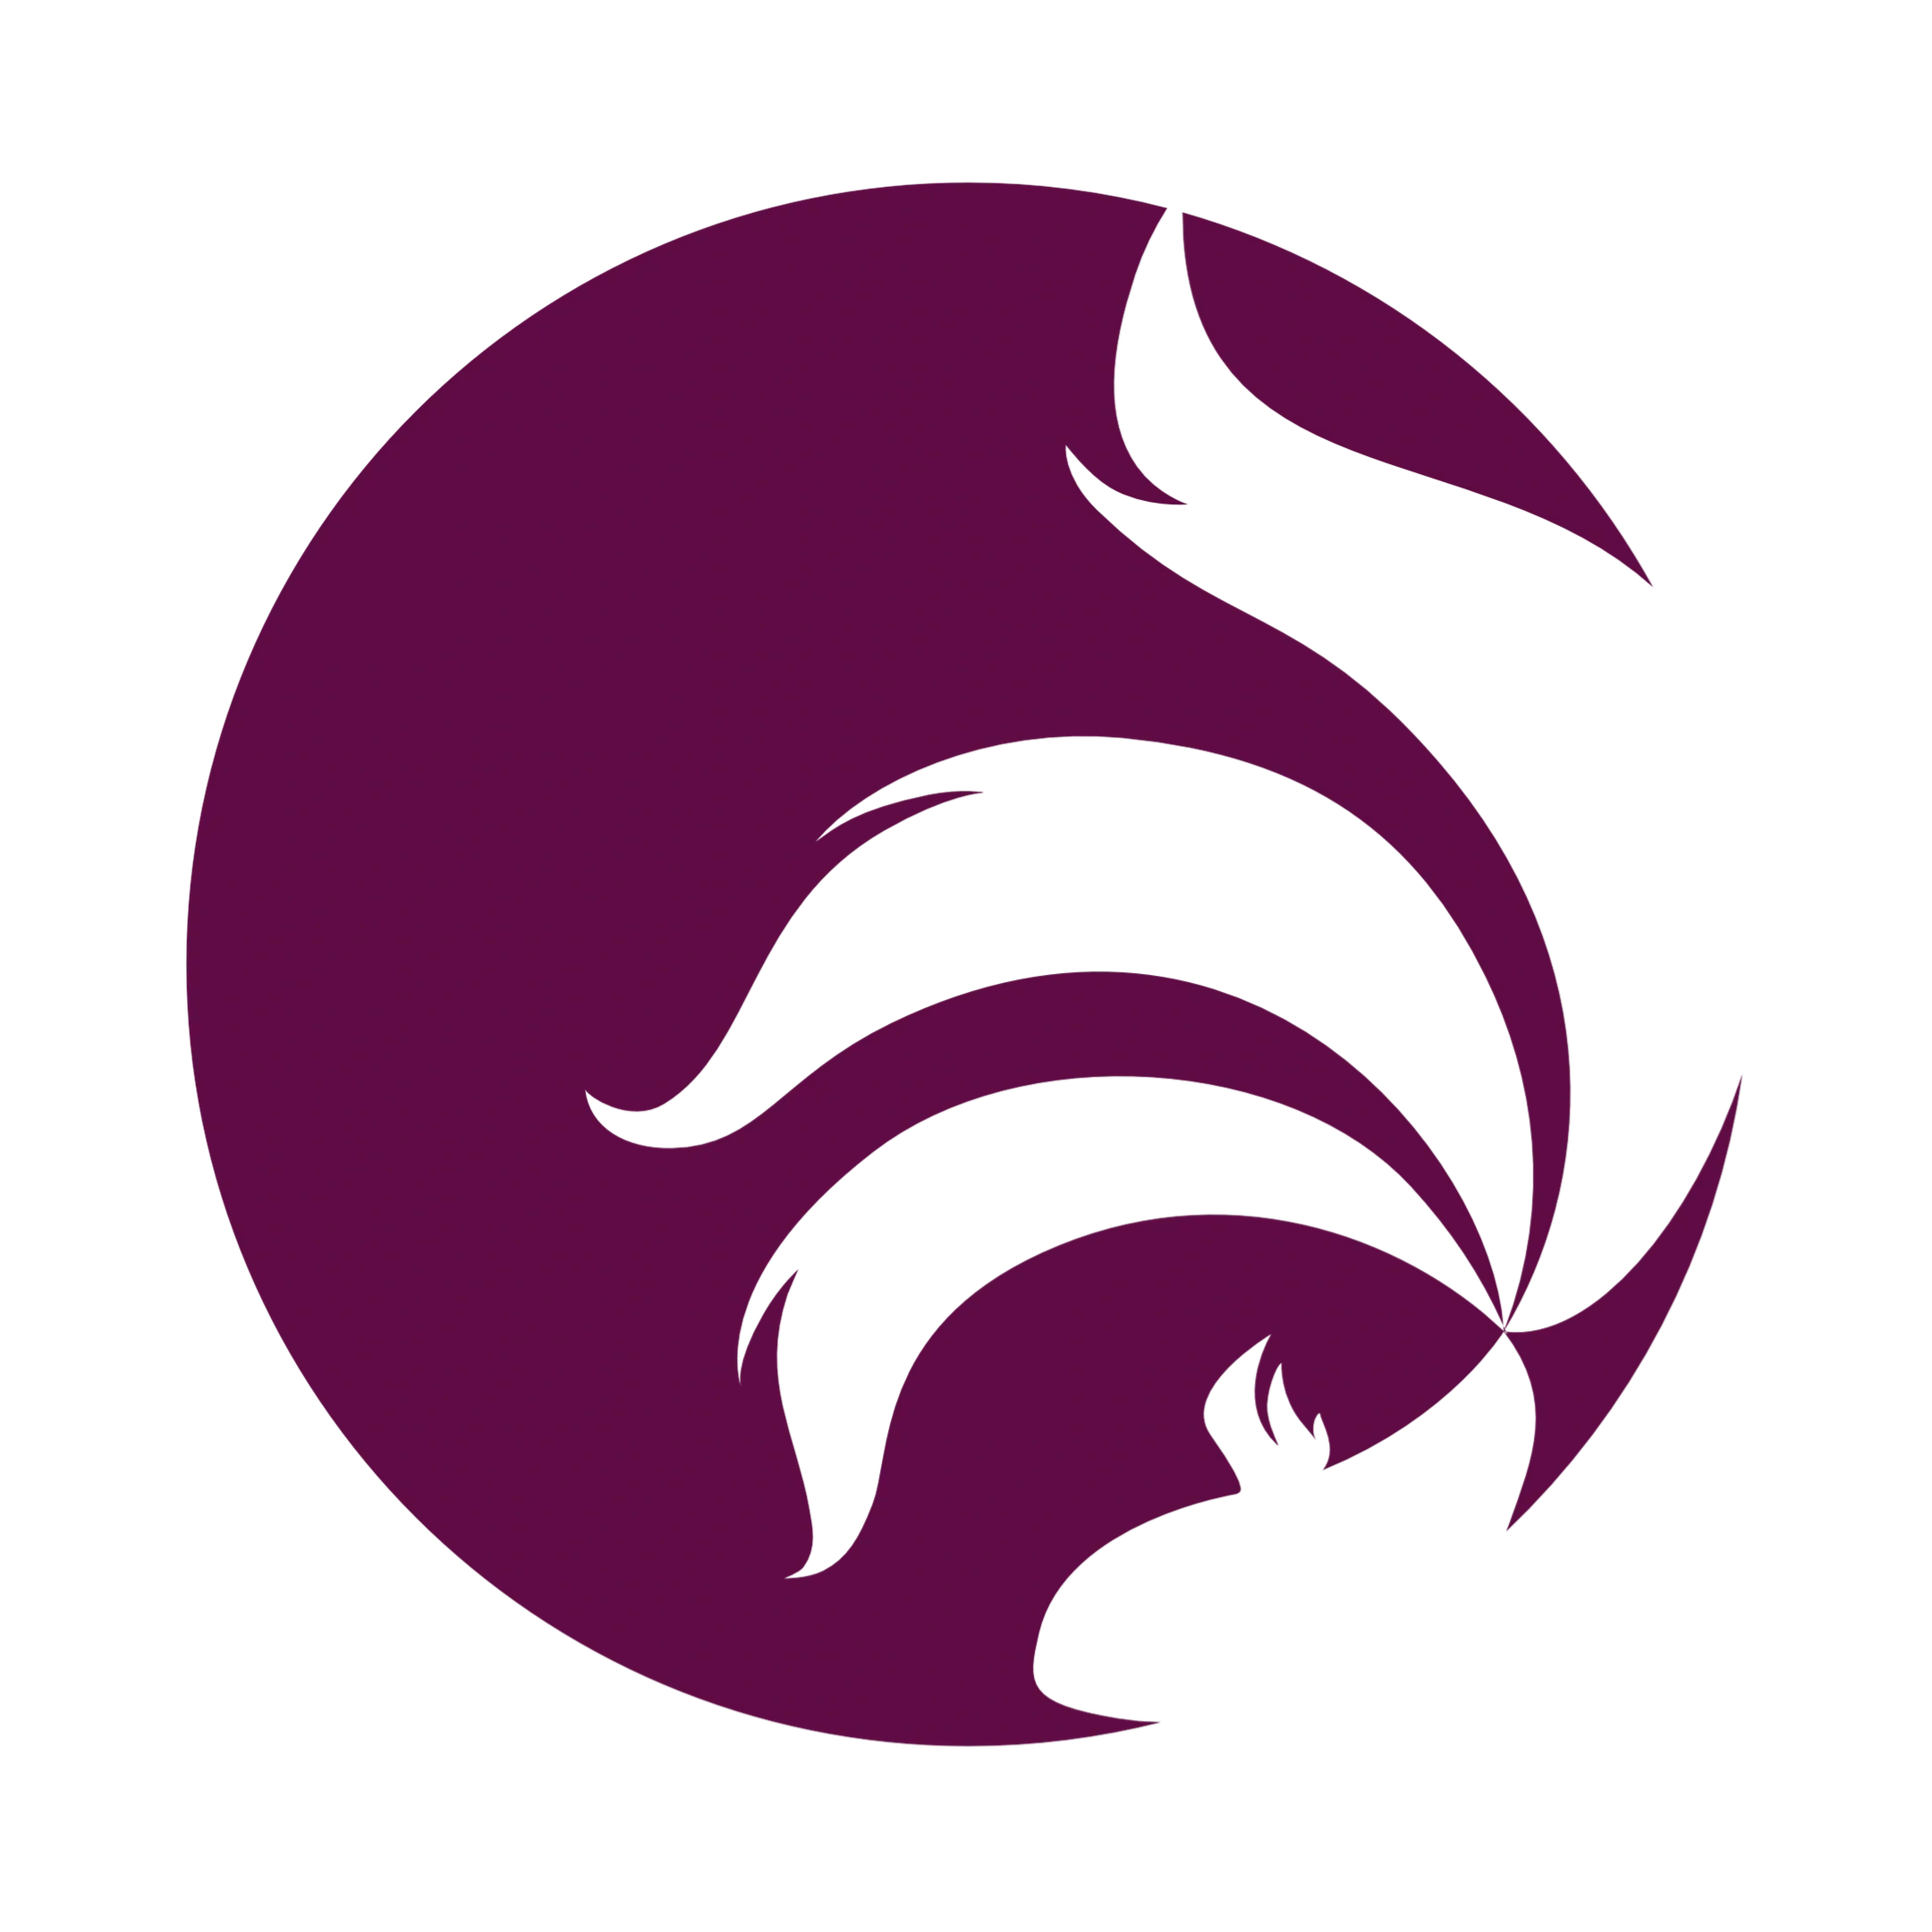 Eros Health logo image a purple circle with a white betta fish inside